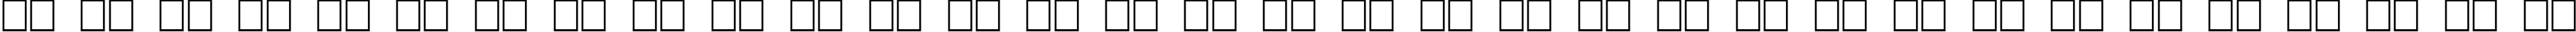 Пример написания русского алфавита шрифтом Brassett